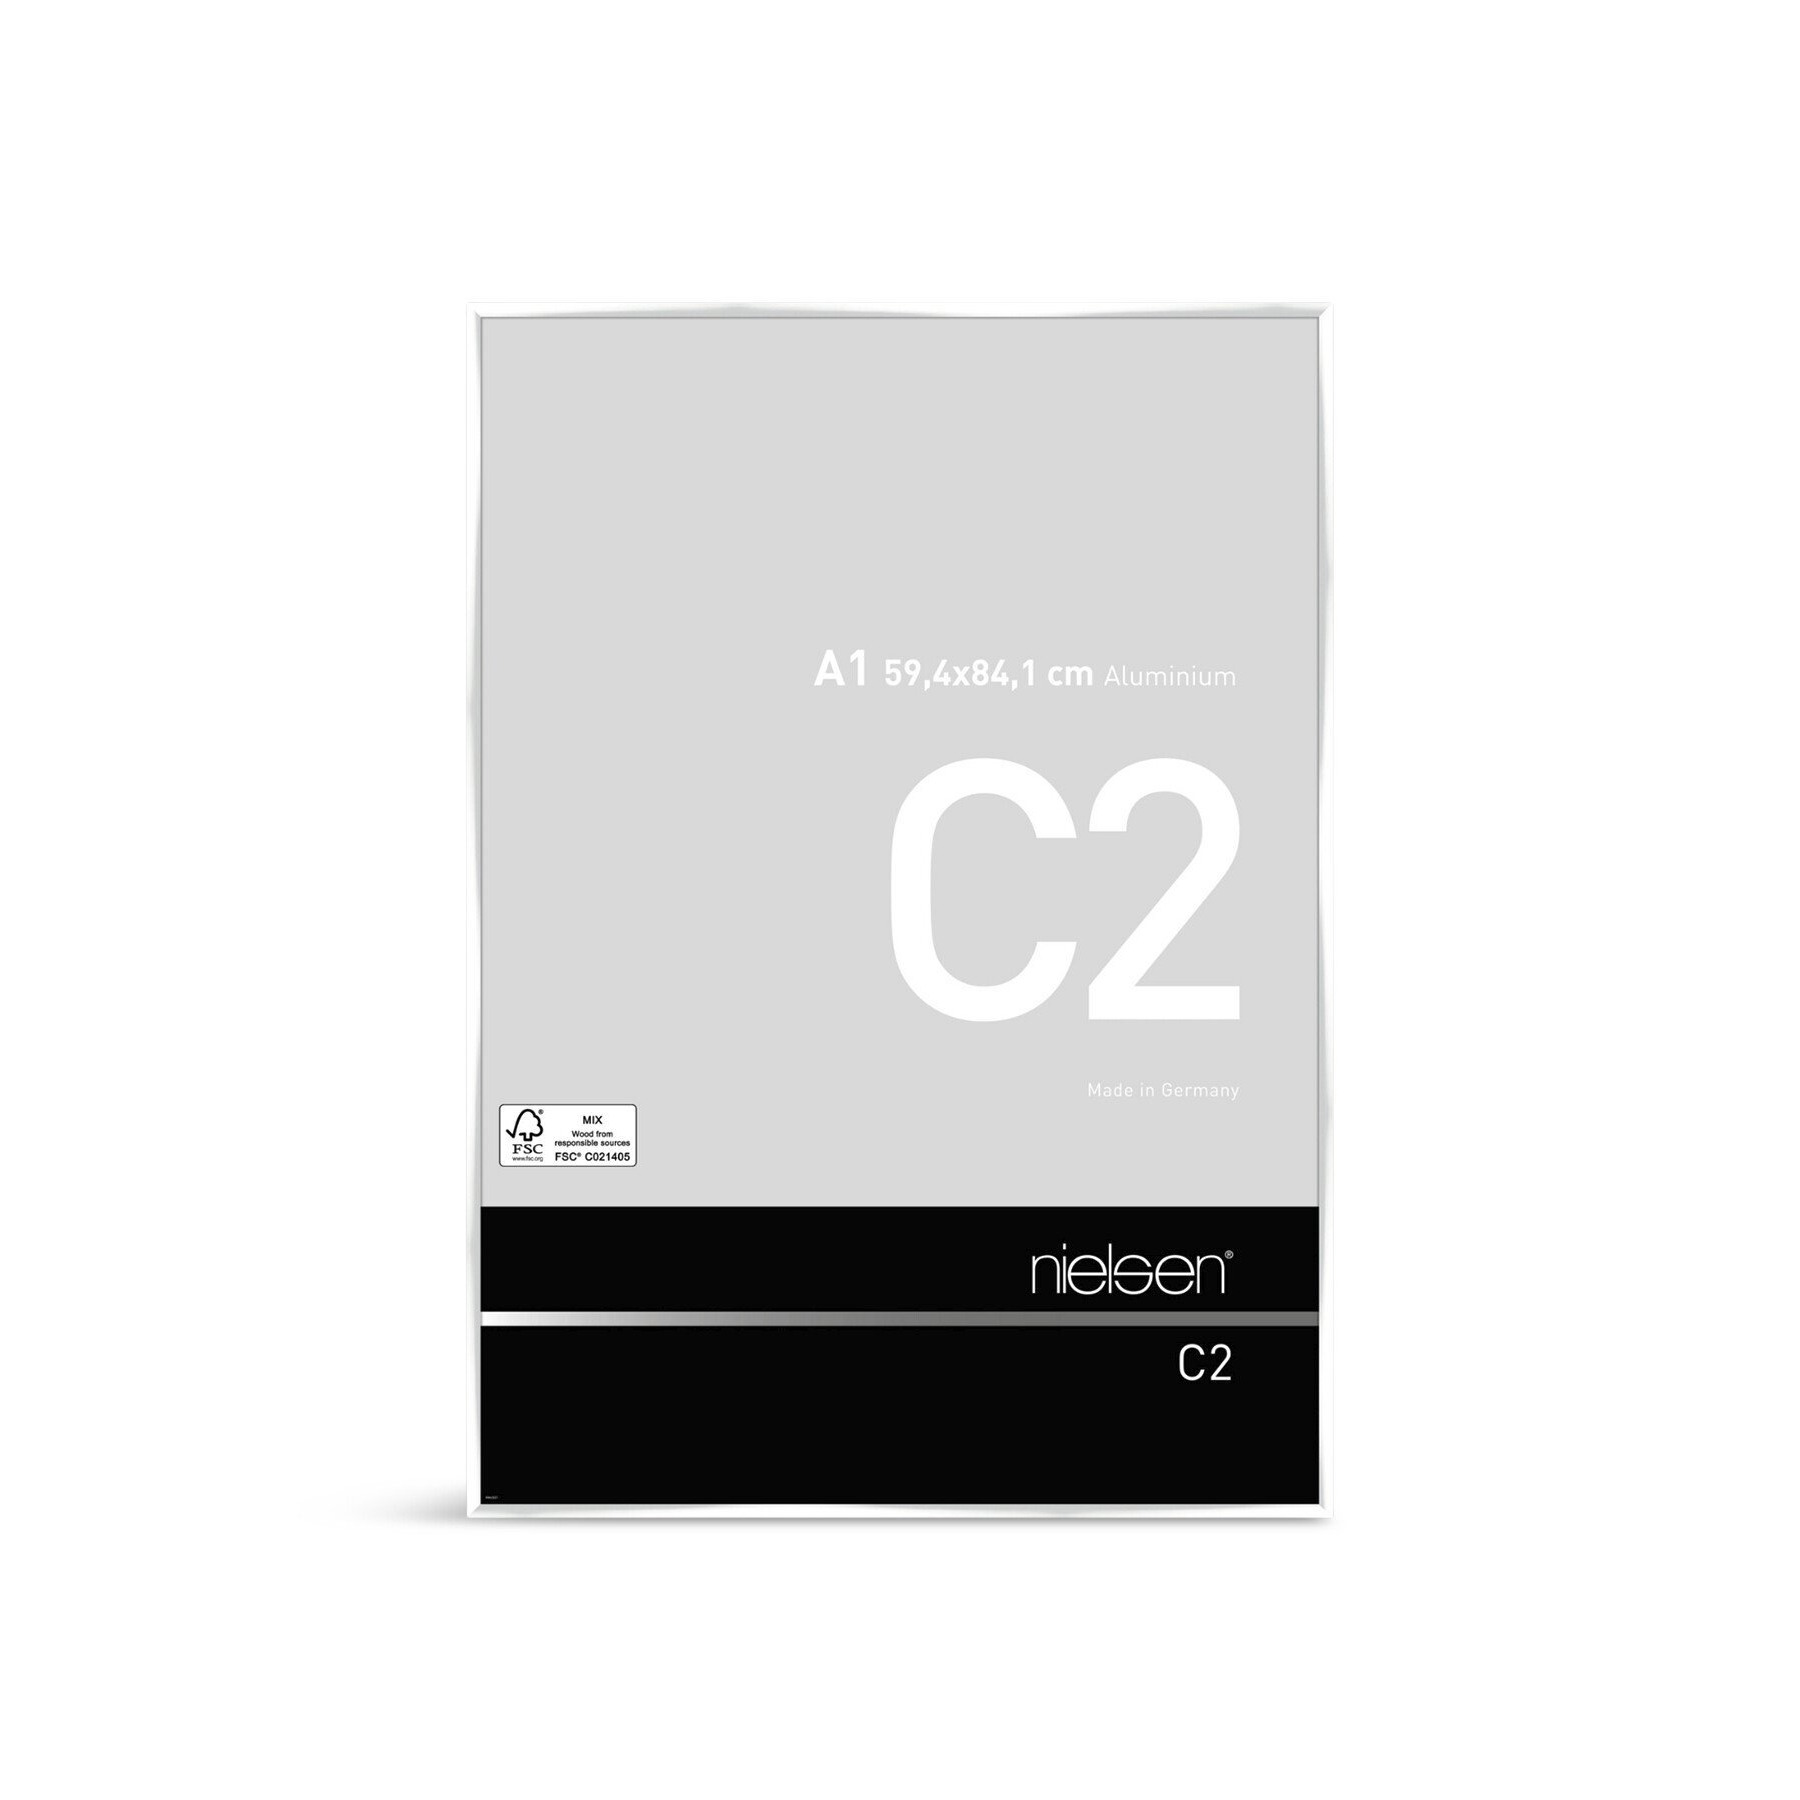 Nielsen C2 Aluminium Poster Frame - Size A1 White - image 1